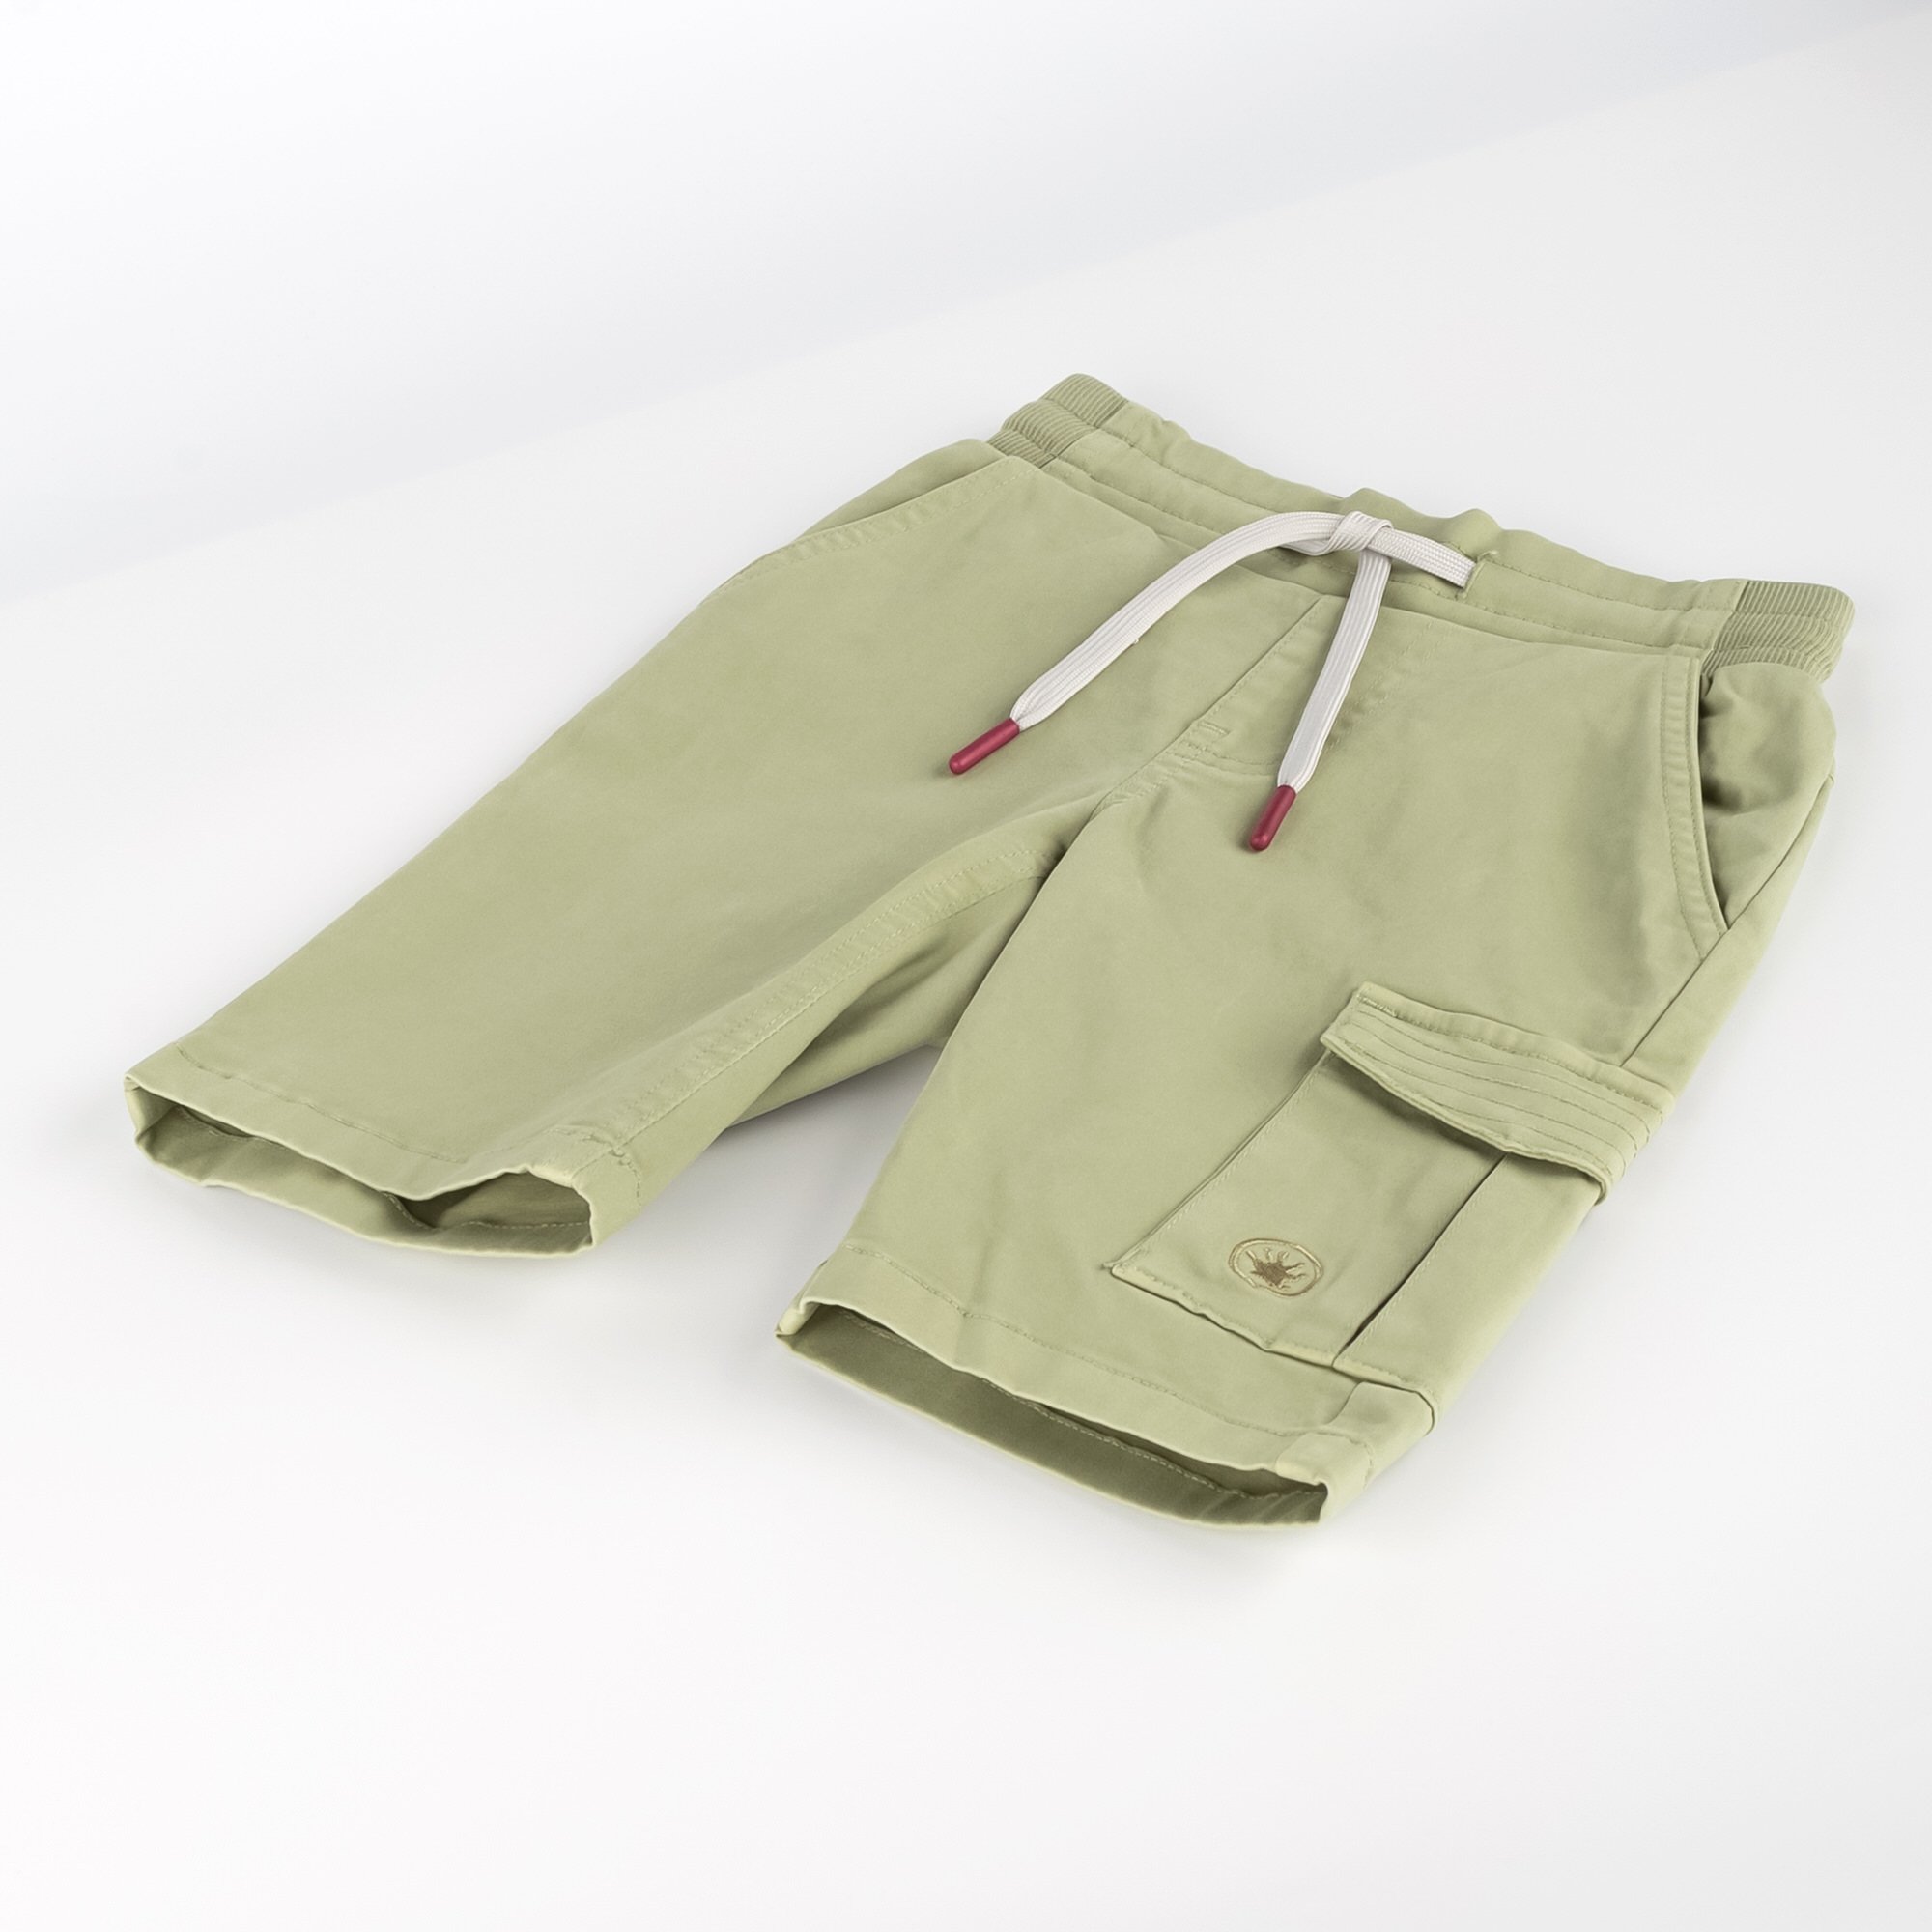 Boys' cargo bermuda shorts, reed green